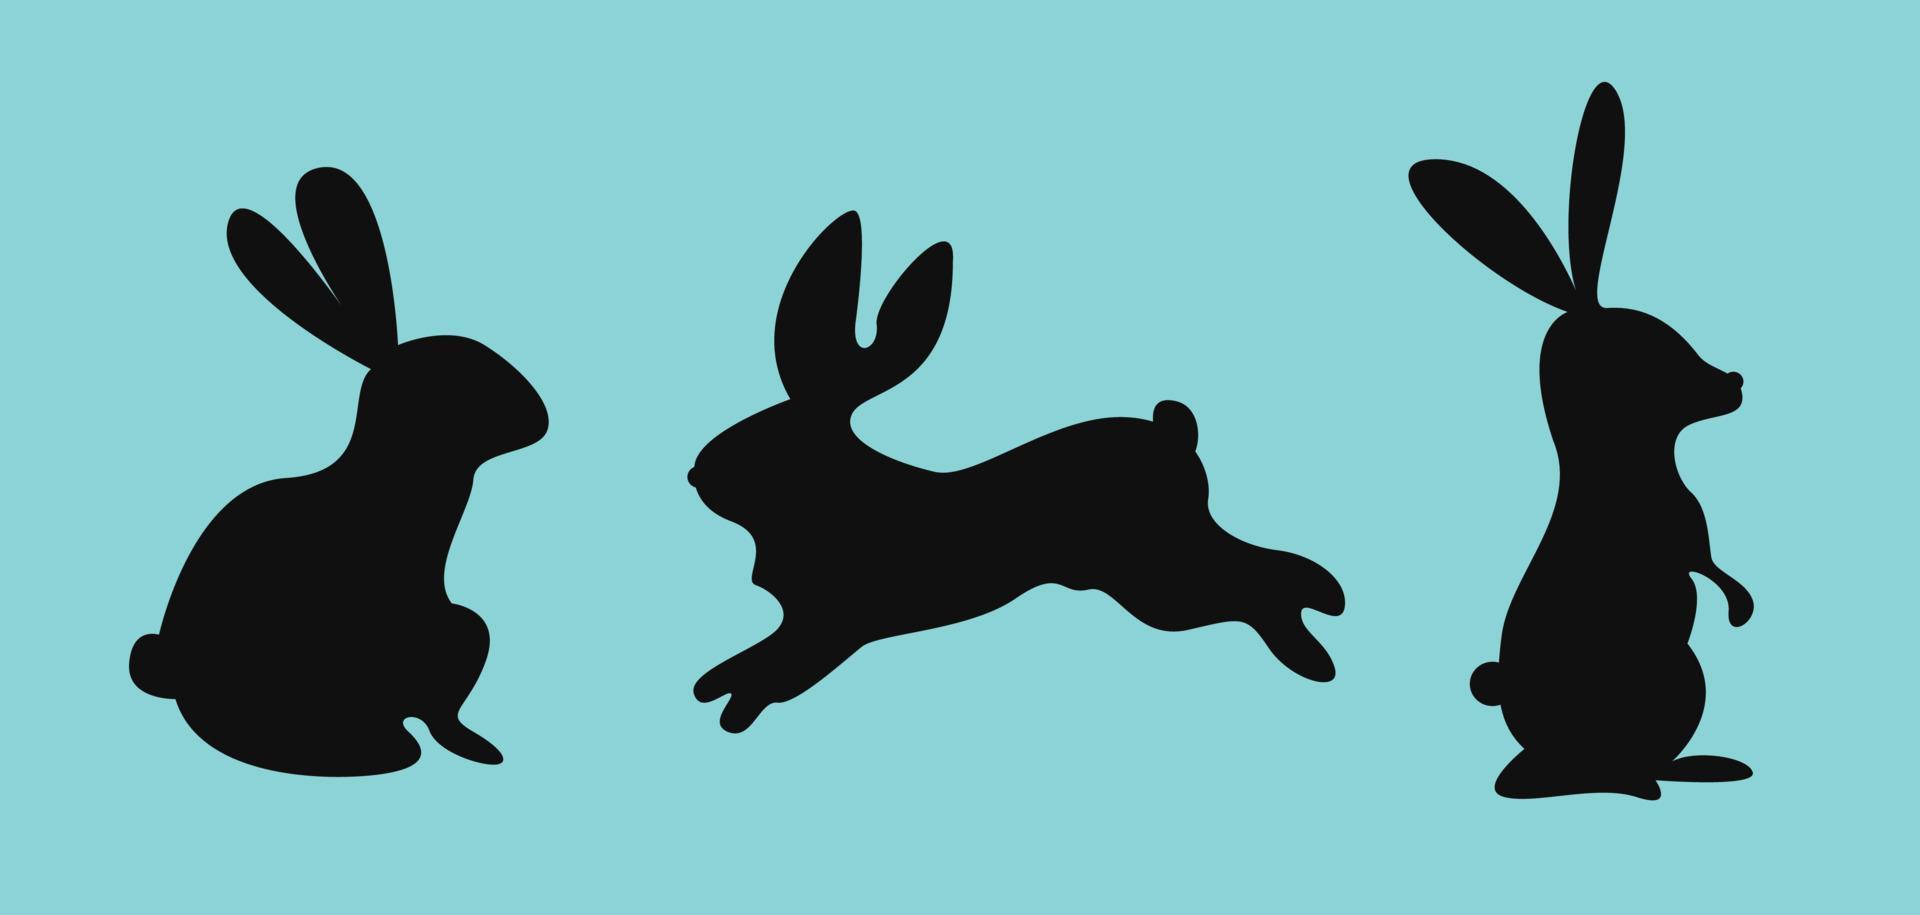 konijn silhouet illustratie vector